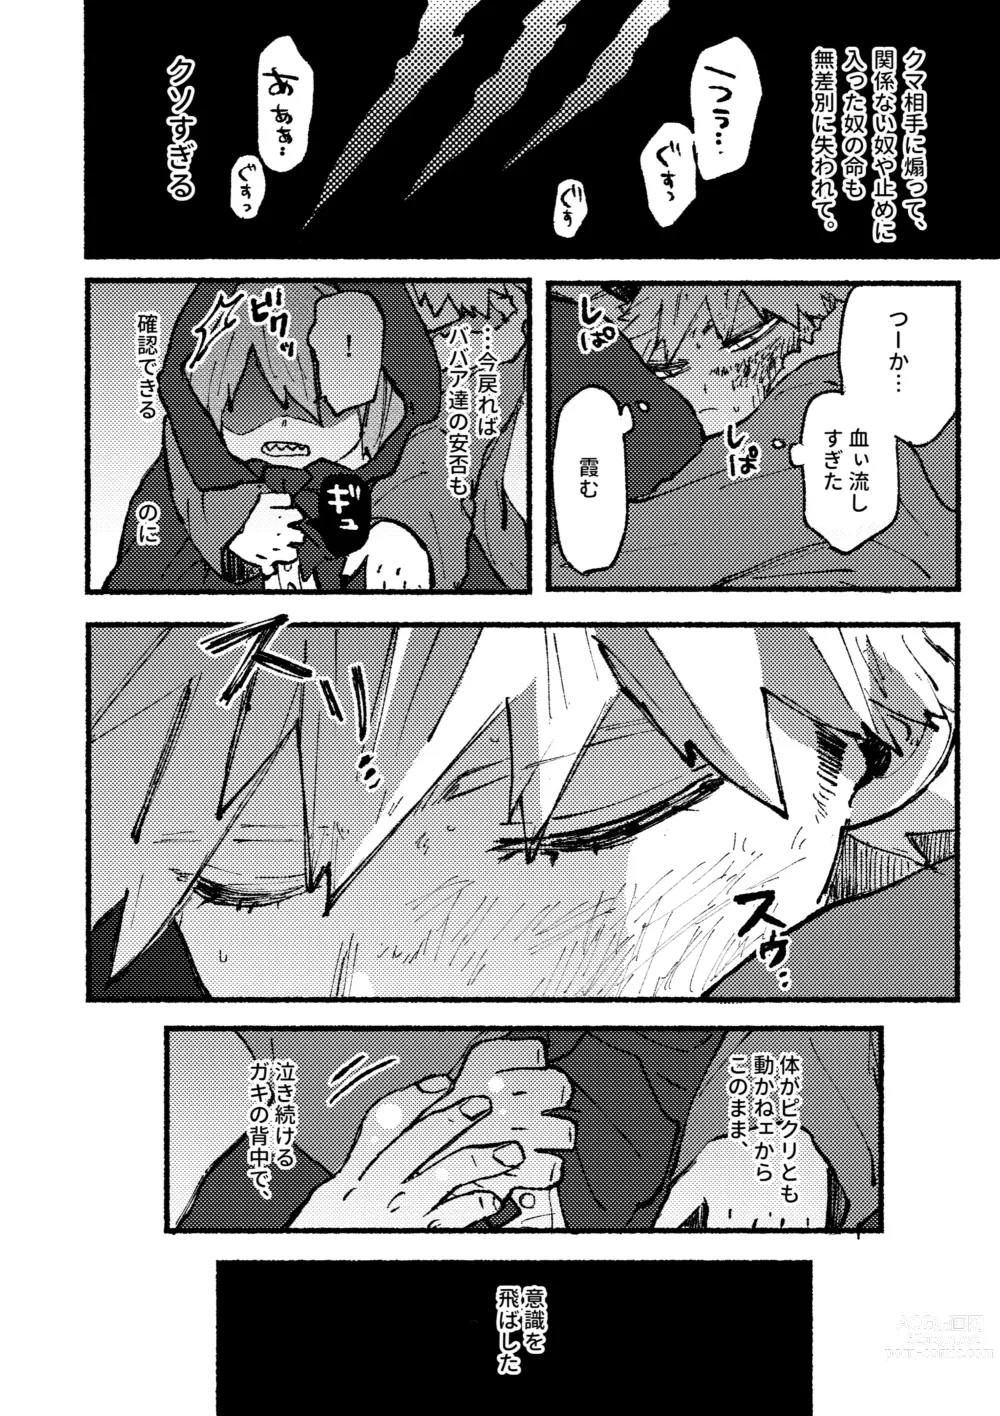 Page 7 of doujinshi Monopolize - You